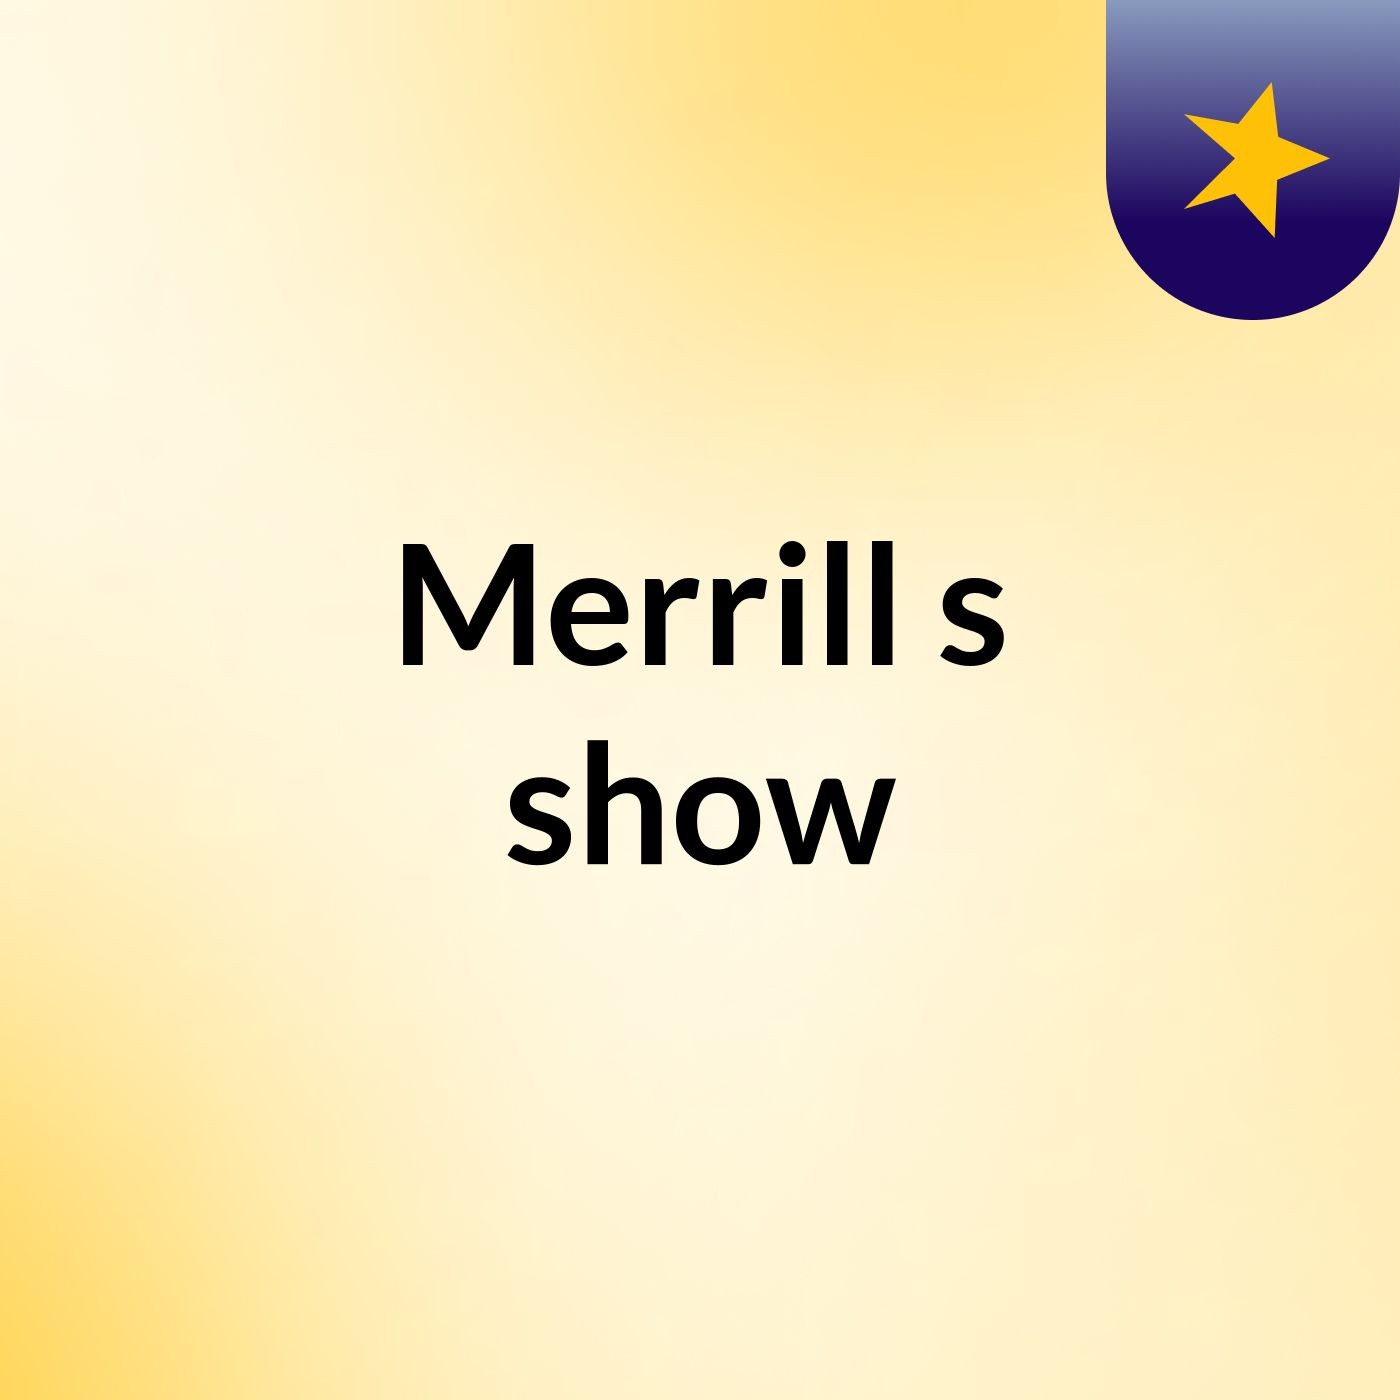 Merrill's show